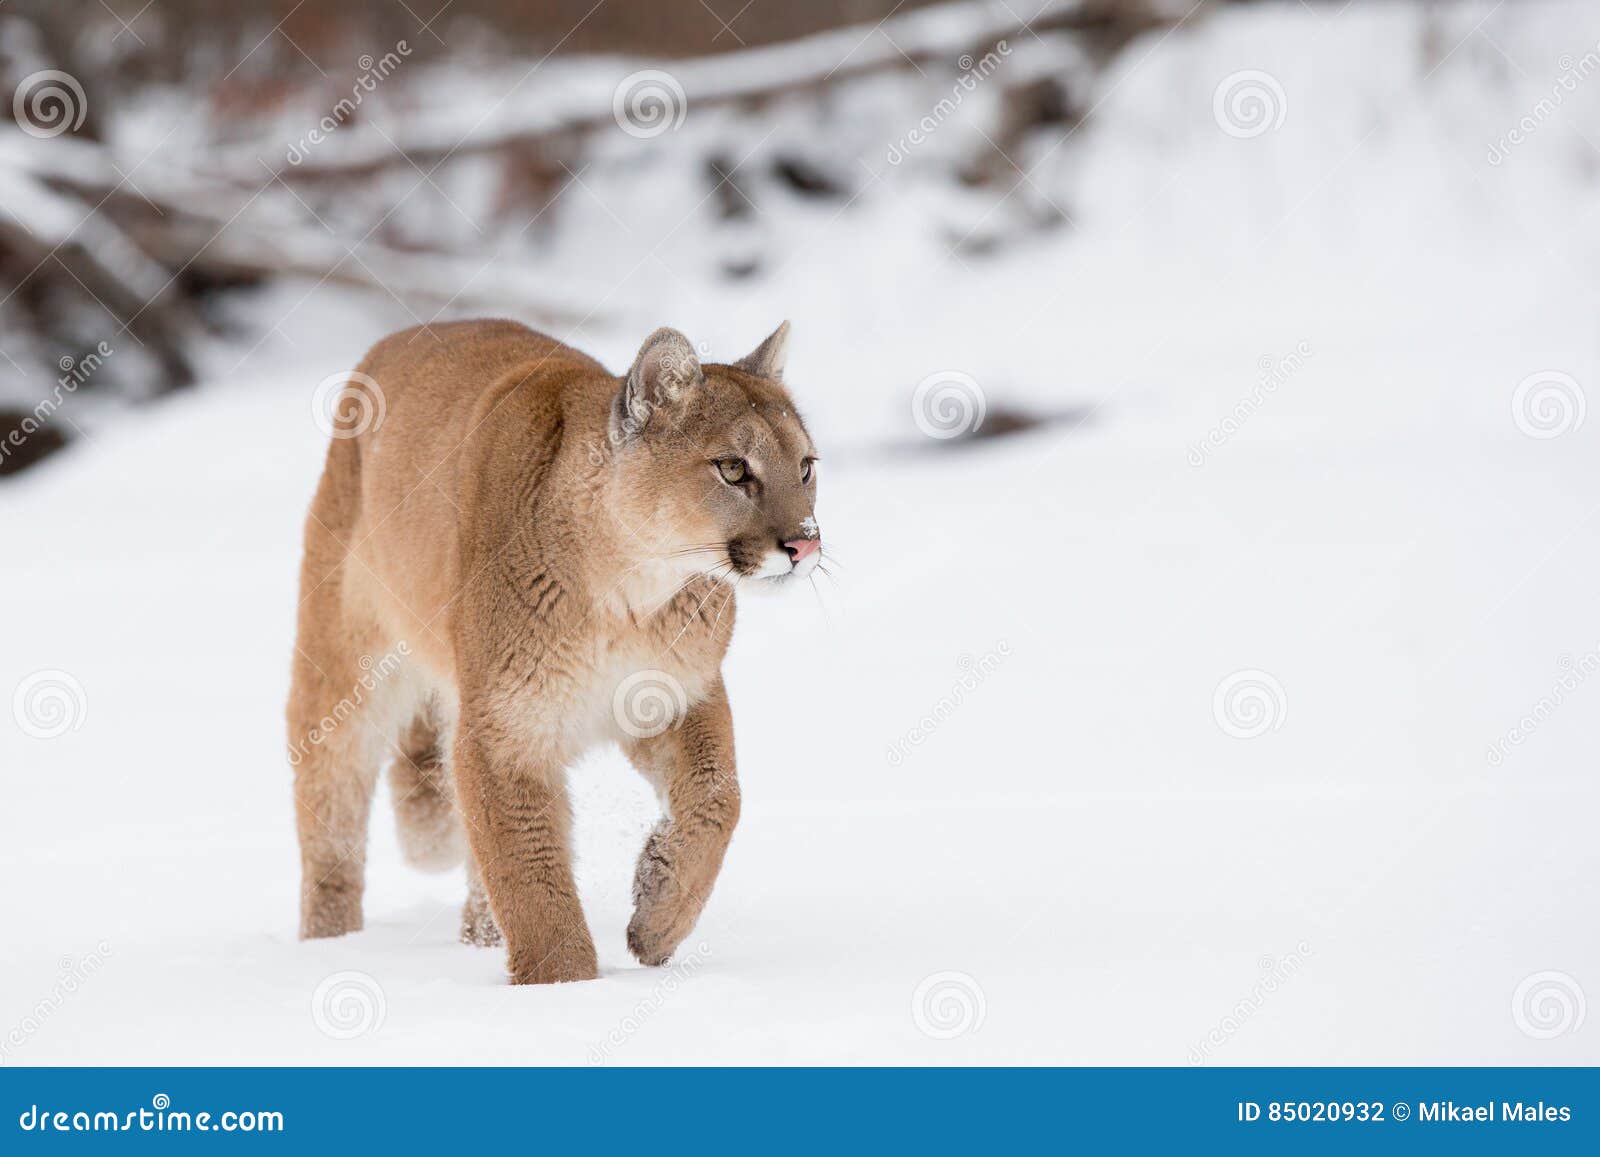 mountain lion walking along snowy river